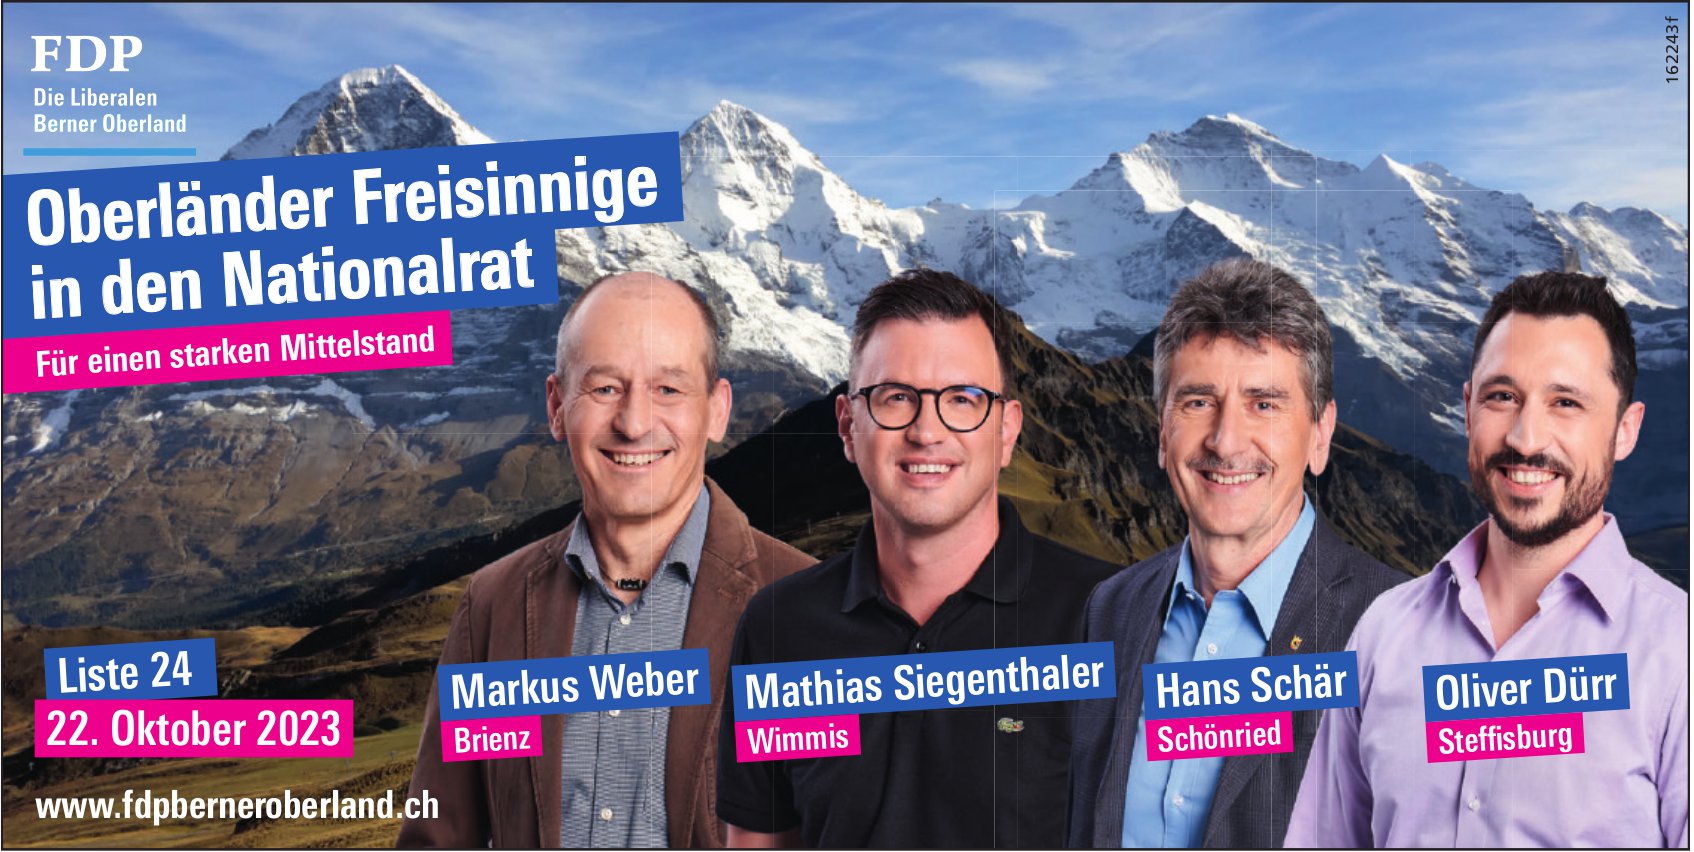 FDP - Markus Weber, Mathias Siegenthaler, Hans Schär & Oliver Dürr in den Nationalrat